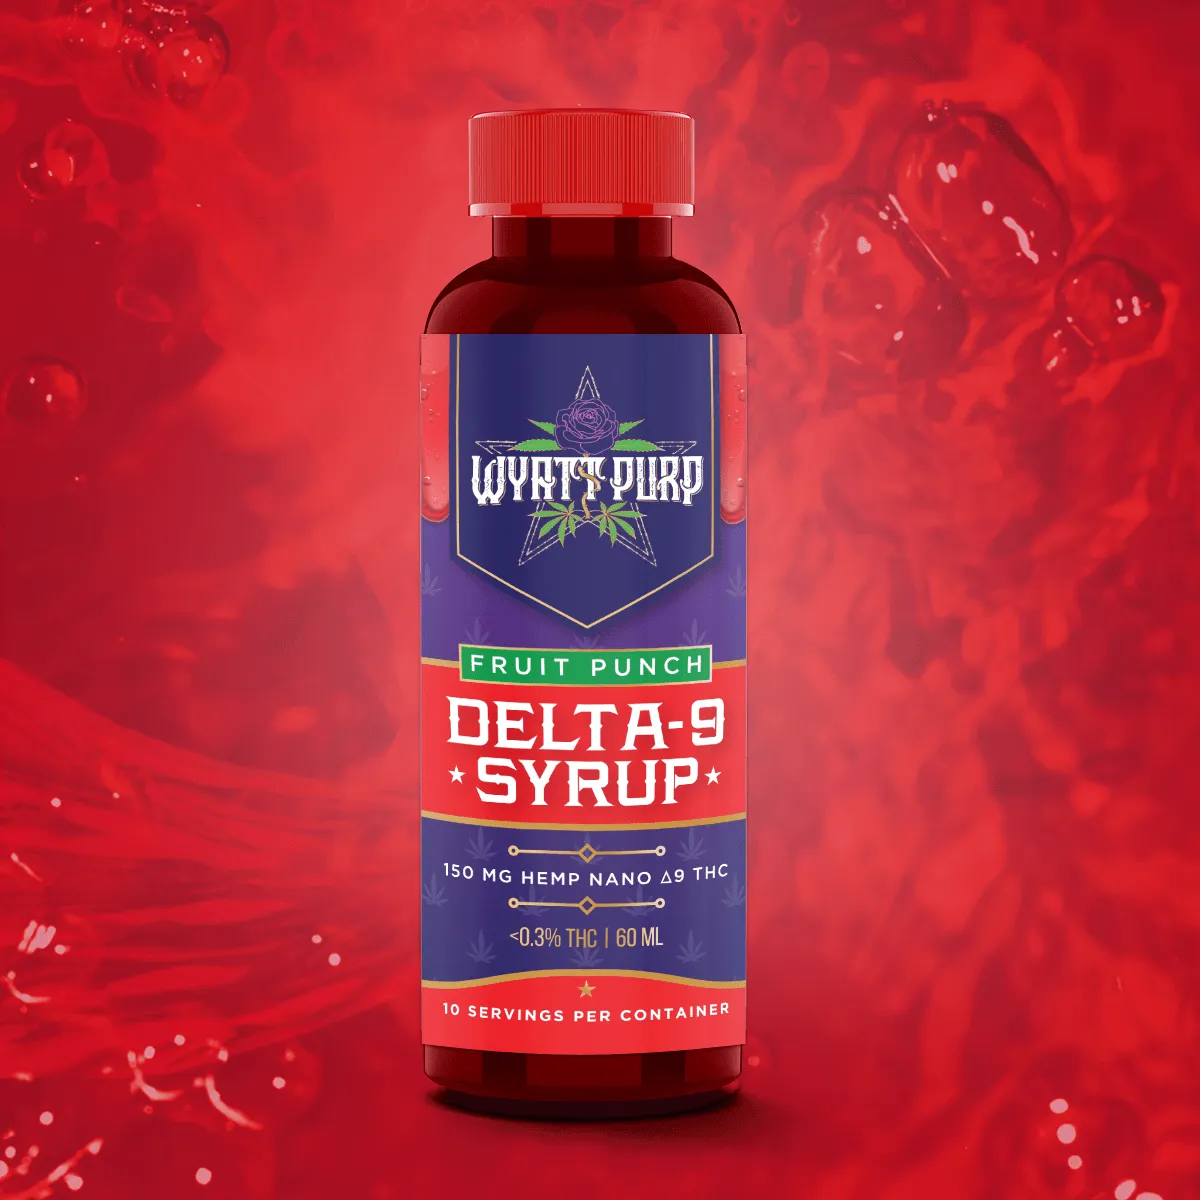 wyatt purp hd9 150mg nano shot delta 9 syrup fruit punch